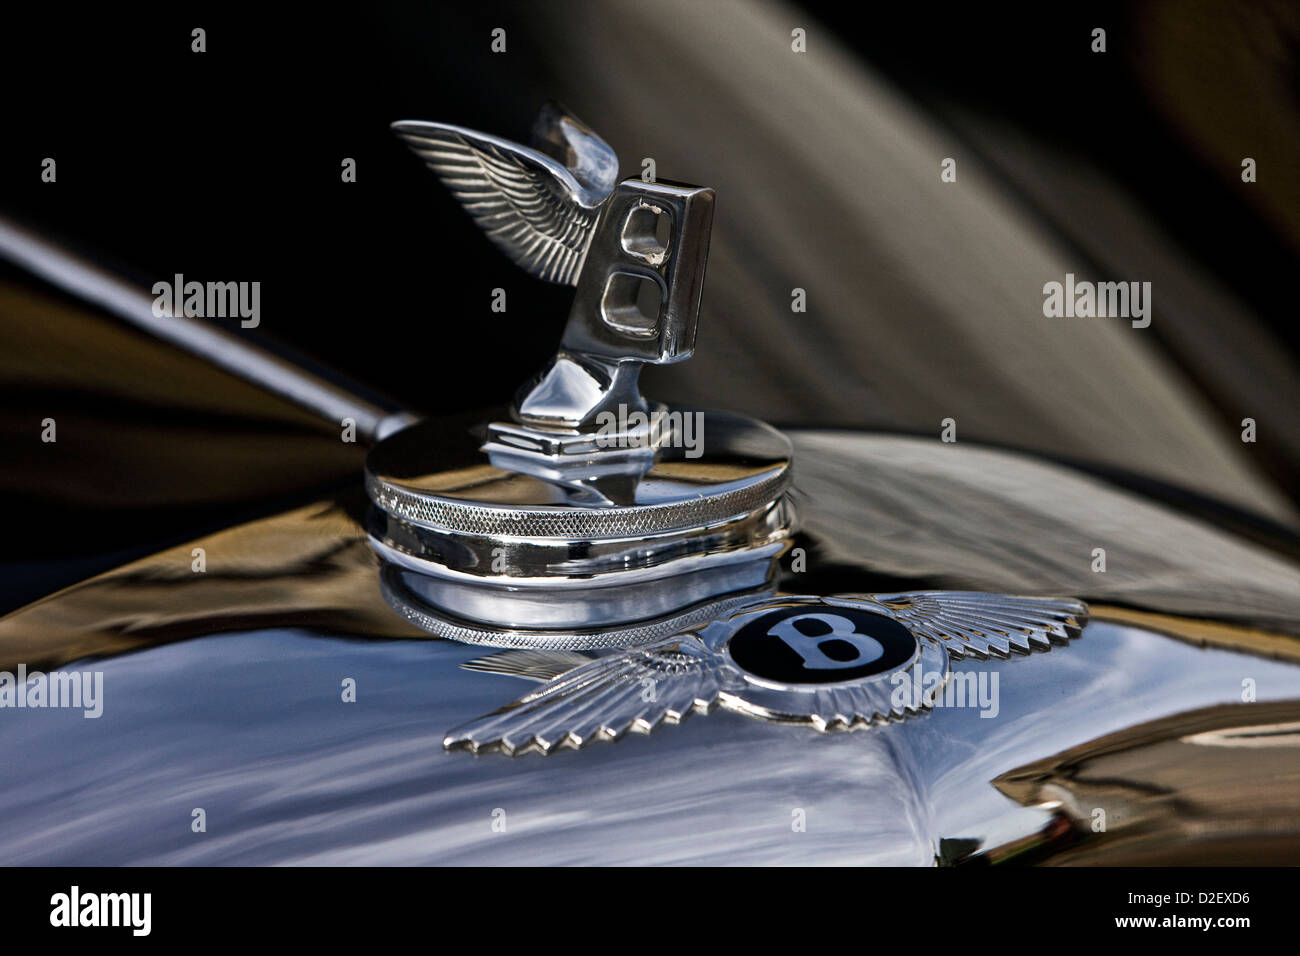 Winged hotte ornement sur Bentley Continental Type R voiture Banque D'Images